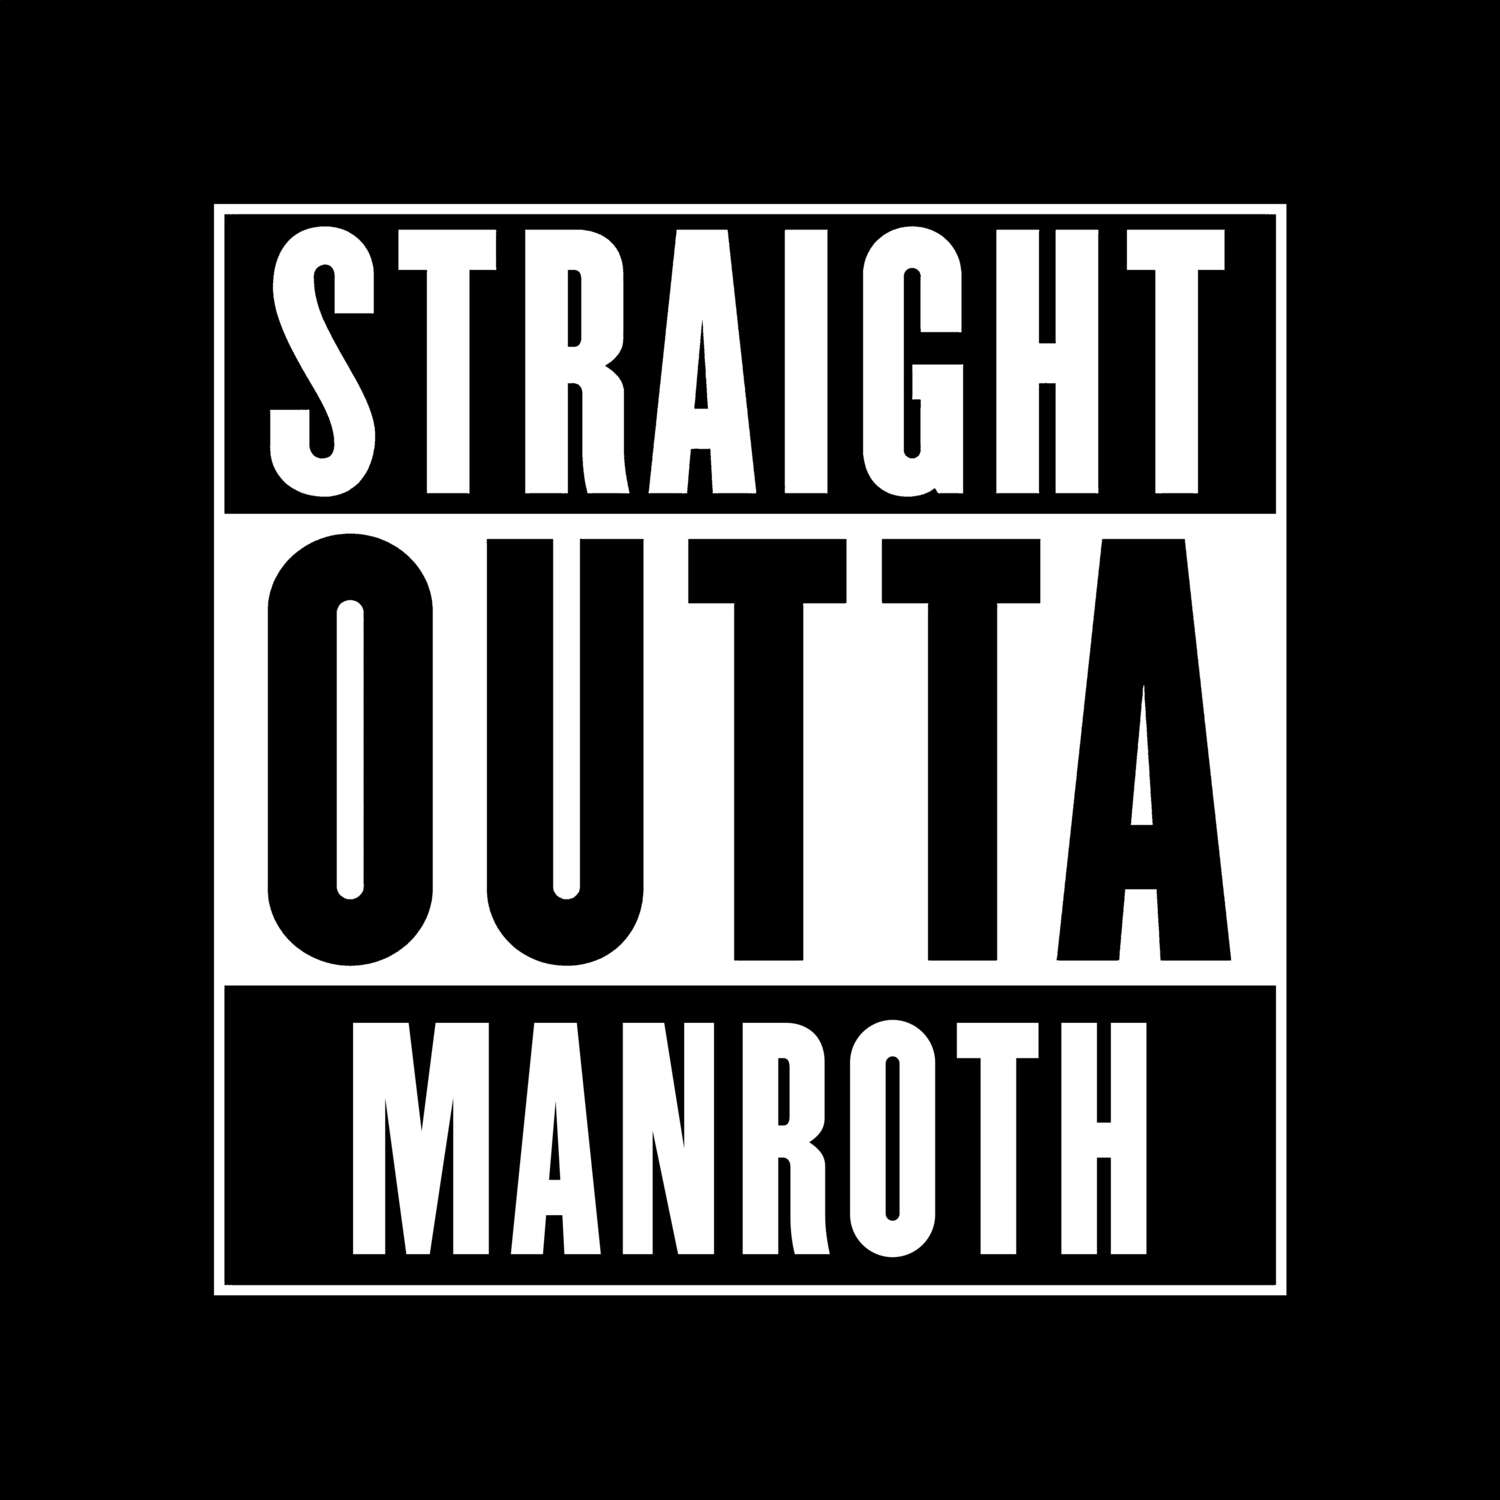 Manroth T-Shirt »Straight Outta«